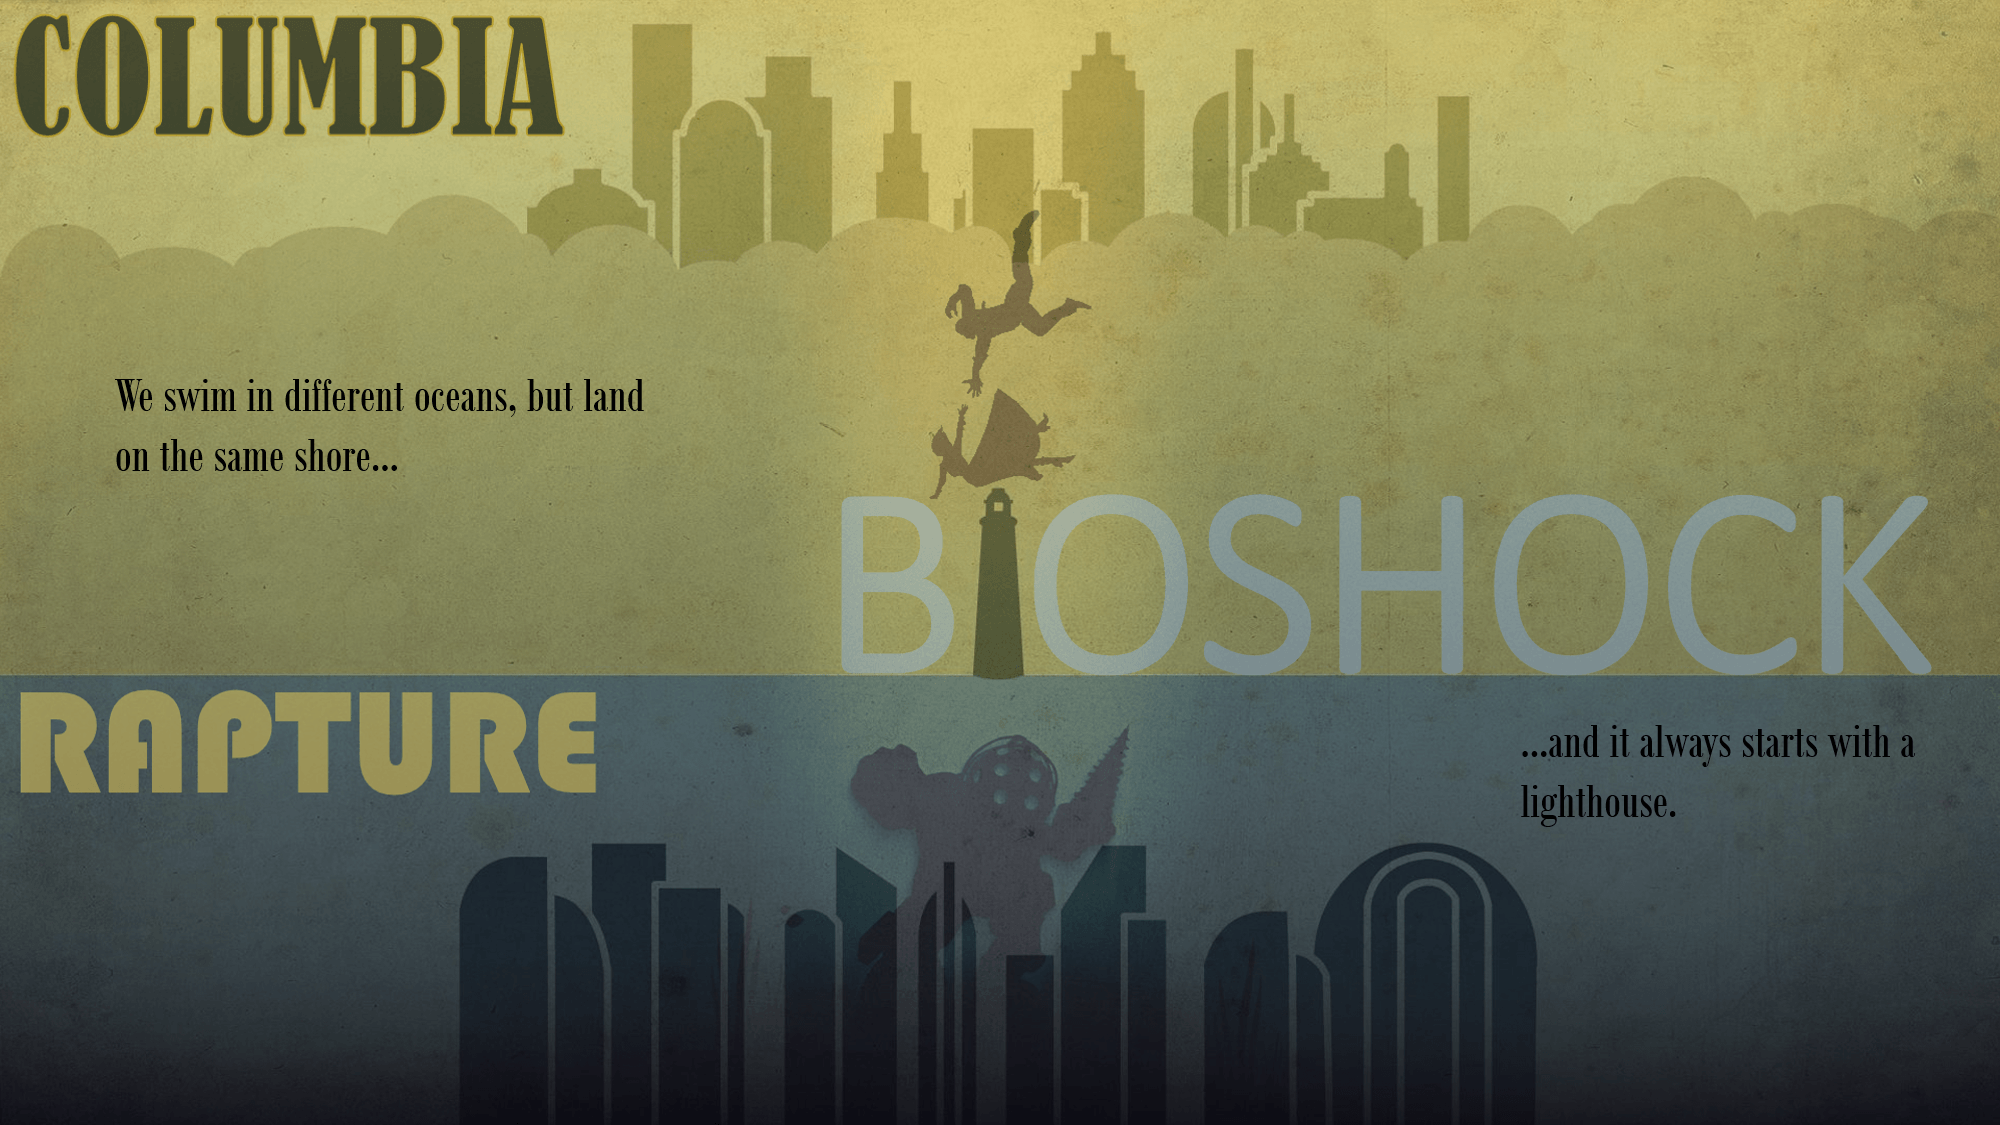 Rapture (Bioshock) HD Wallpaper and Background Image